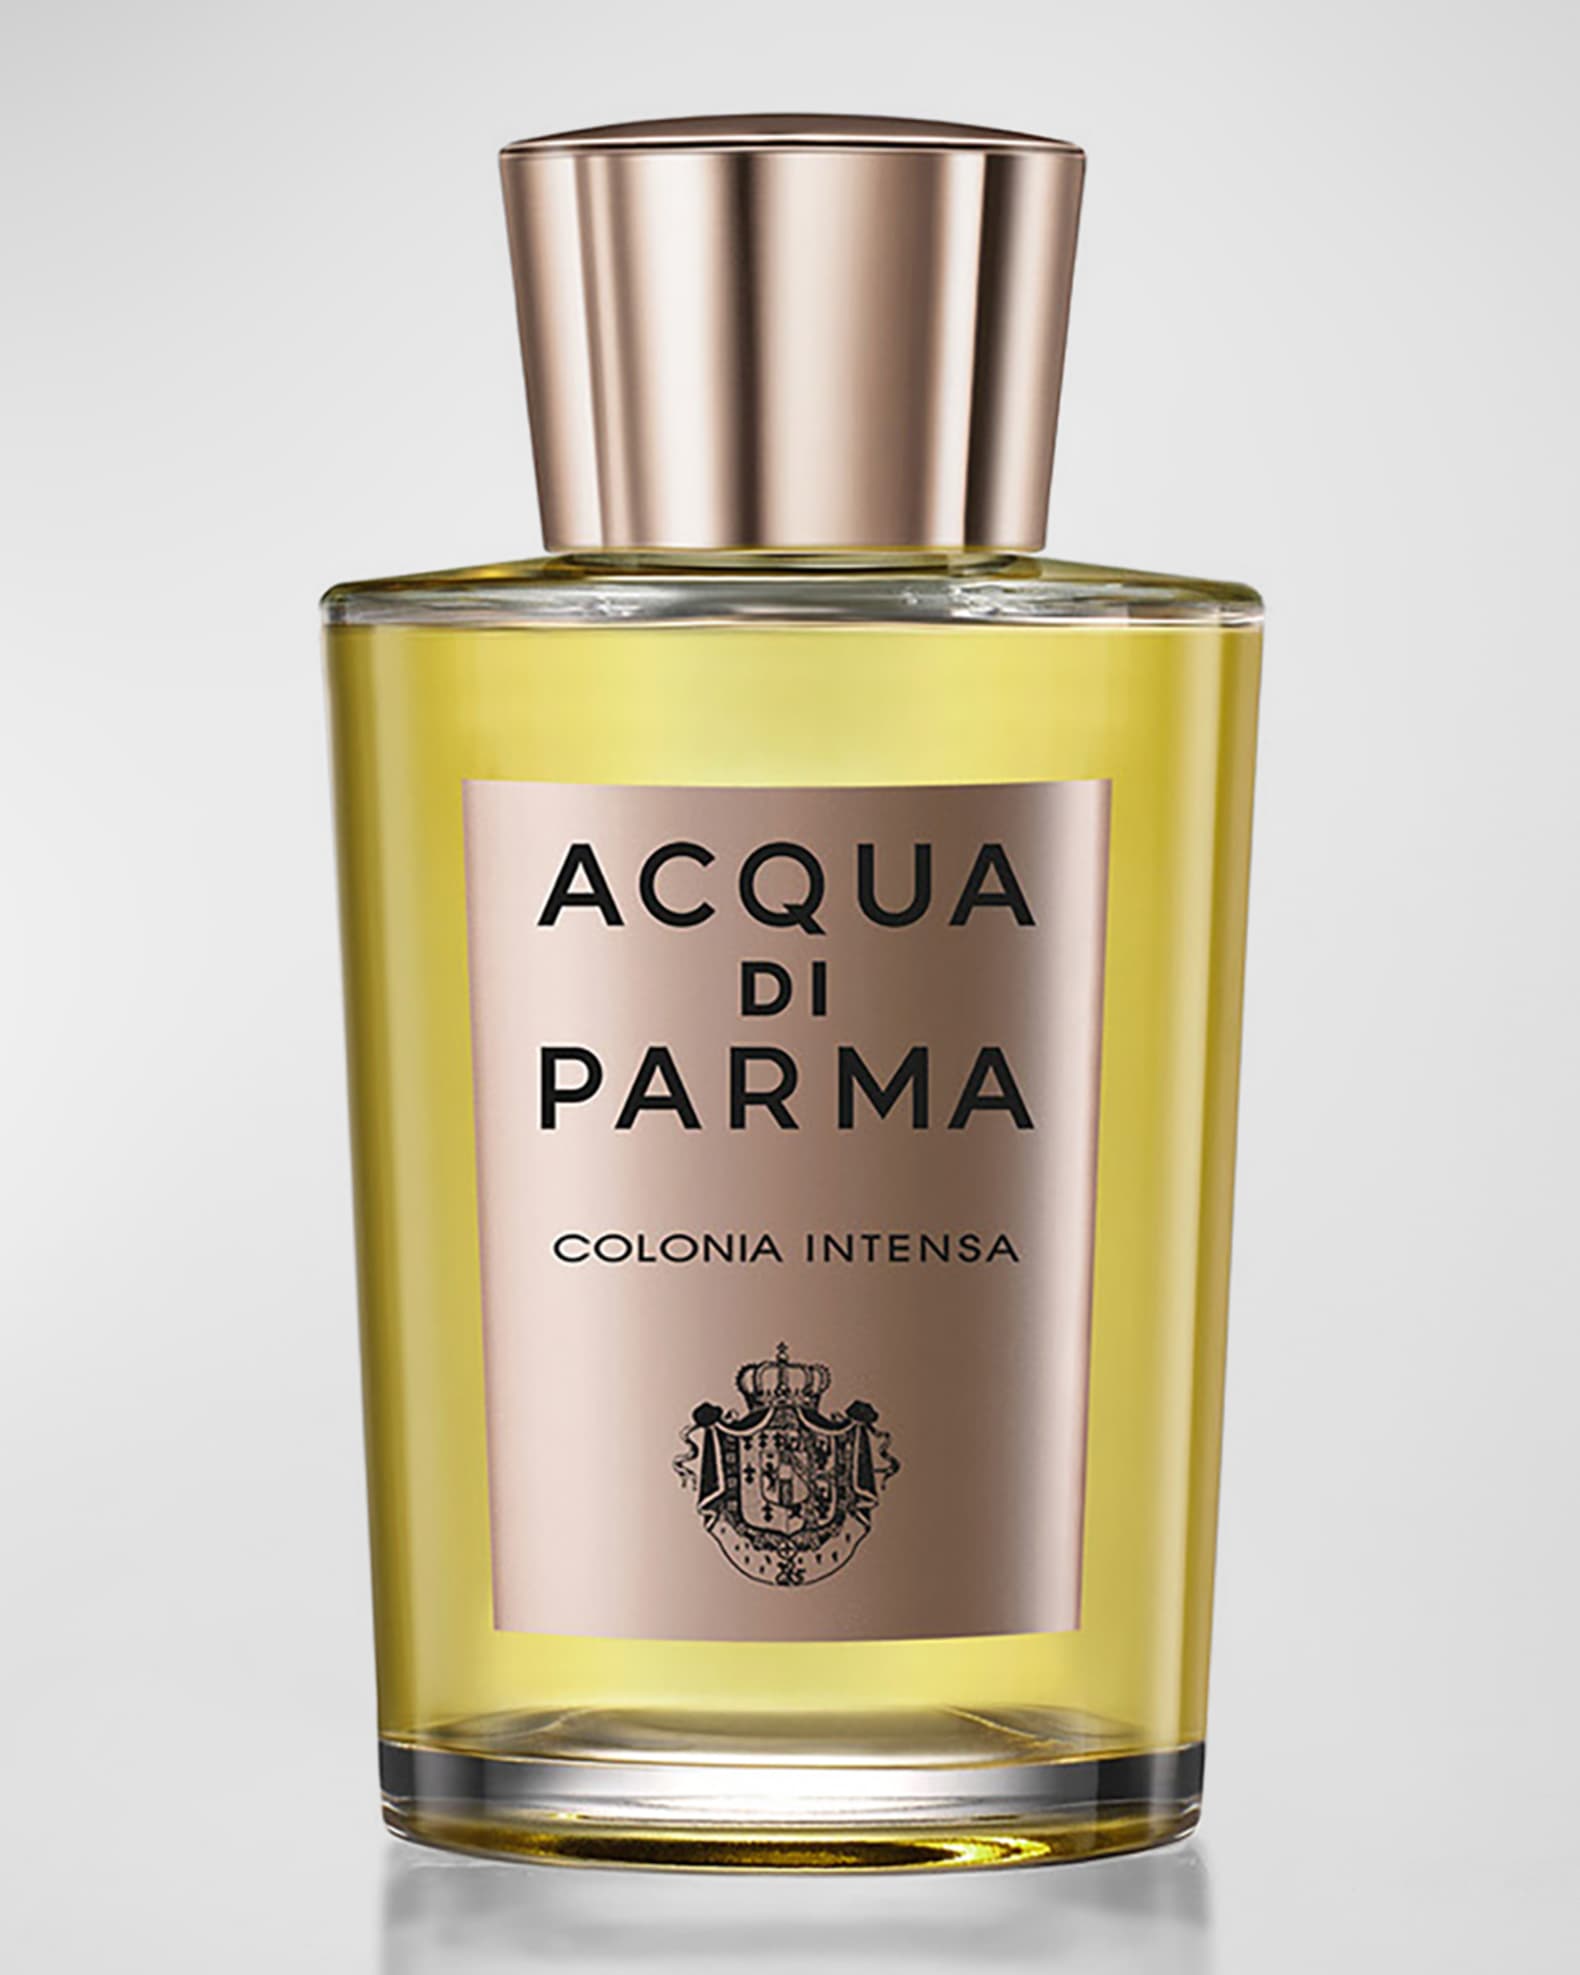 Acqua di Parma Colonia Intensa Eau de Cologne, 6.0 oz. | Neiman Marcus